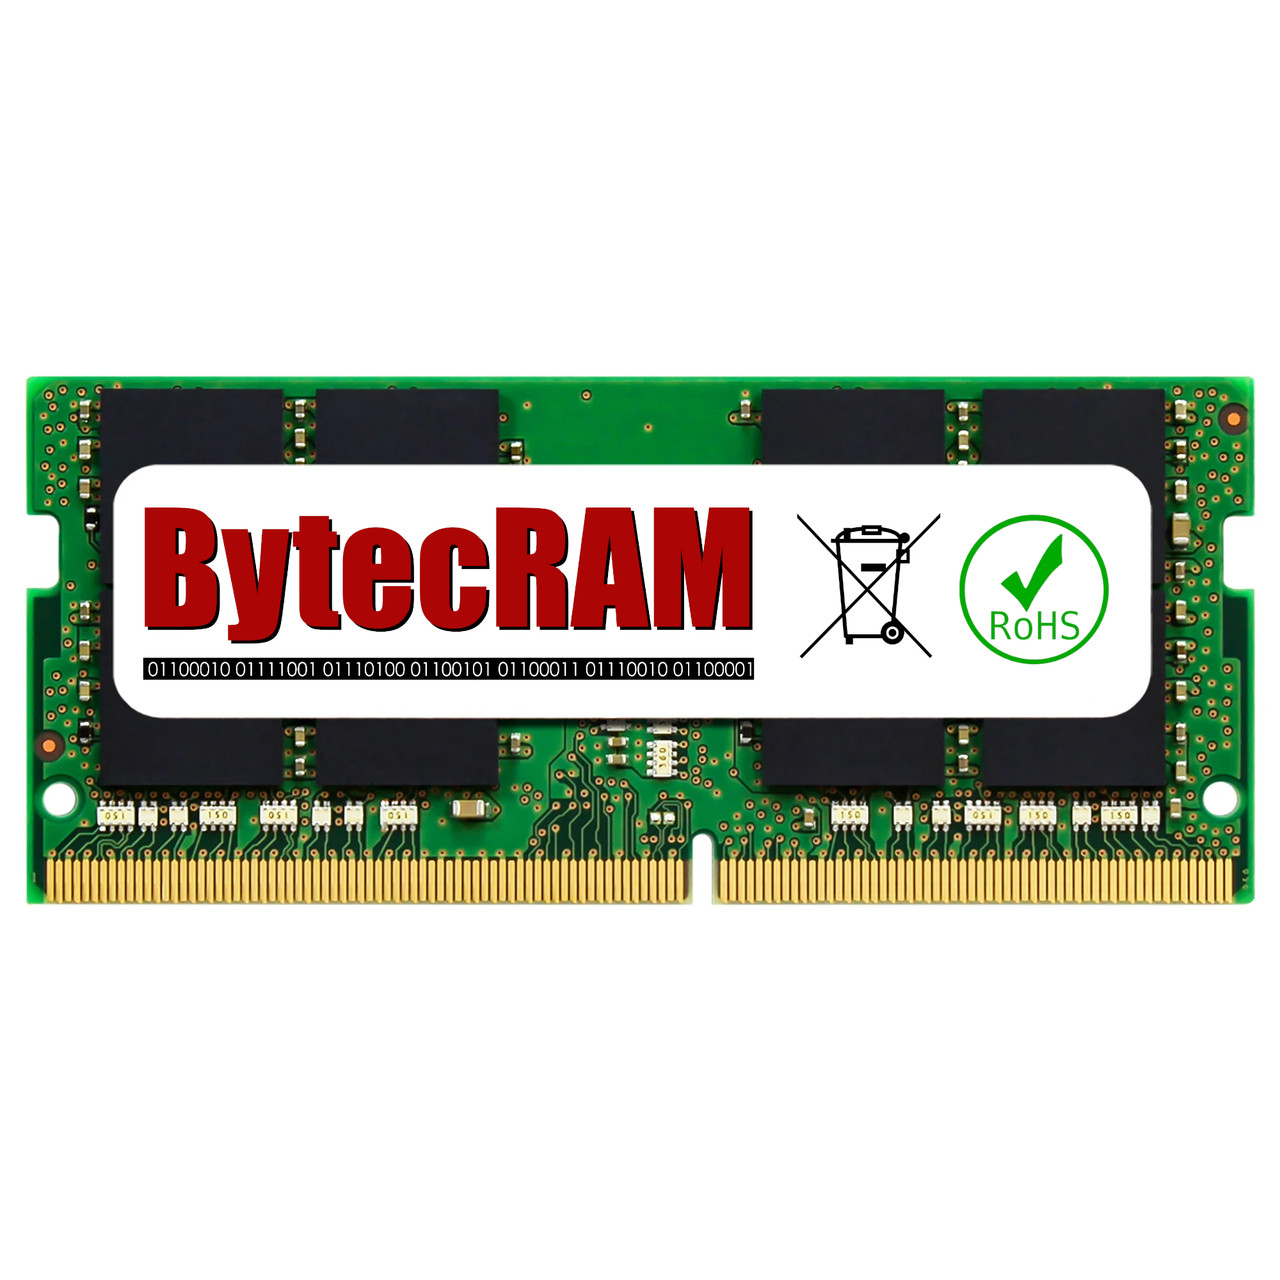 eBay*16GB MSI GS76 Stealth 11UH-029 DDR4 3200MHz Sodimm Memory RAM Upgrade